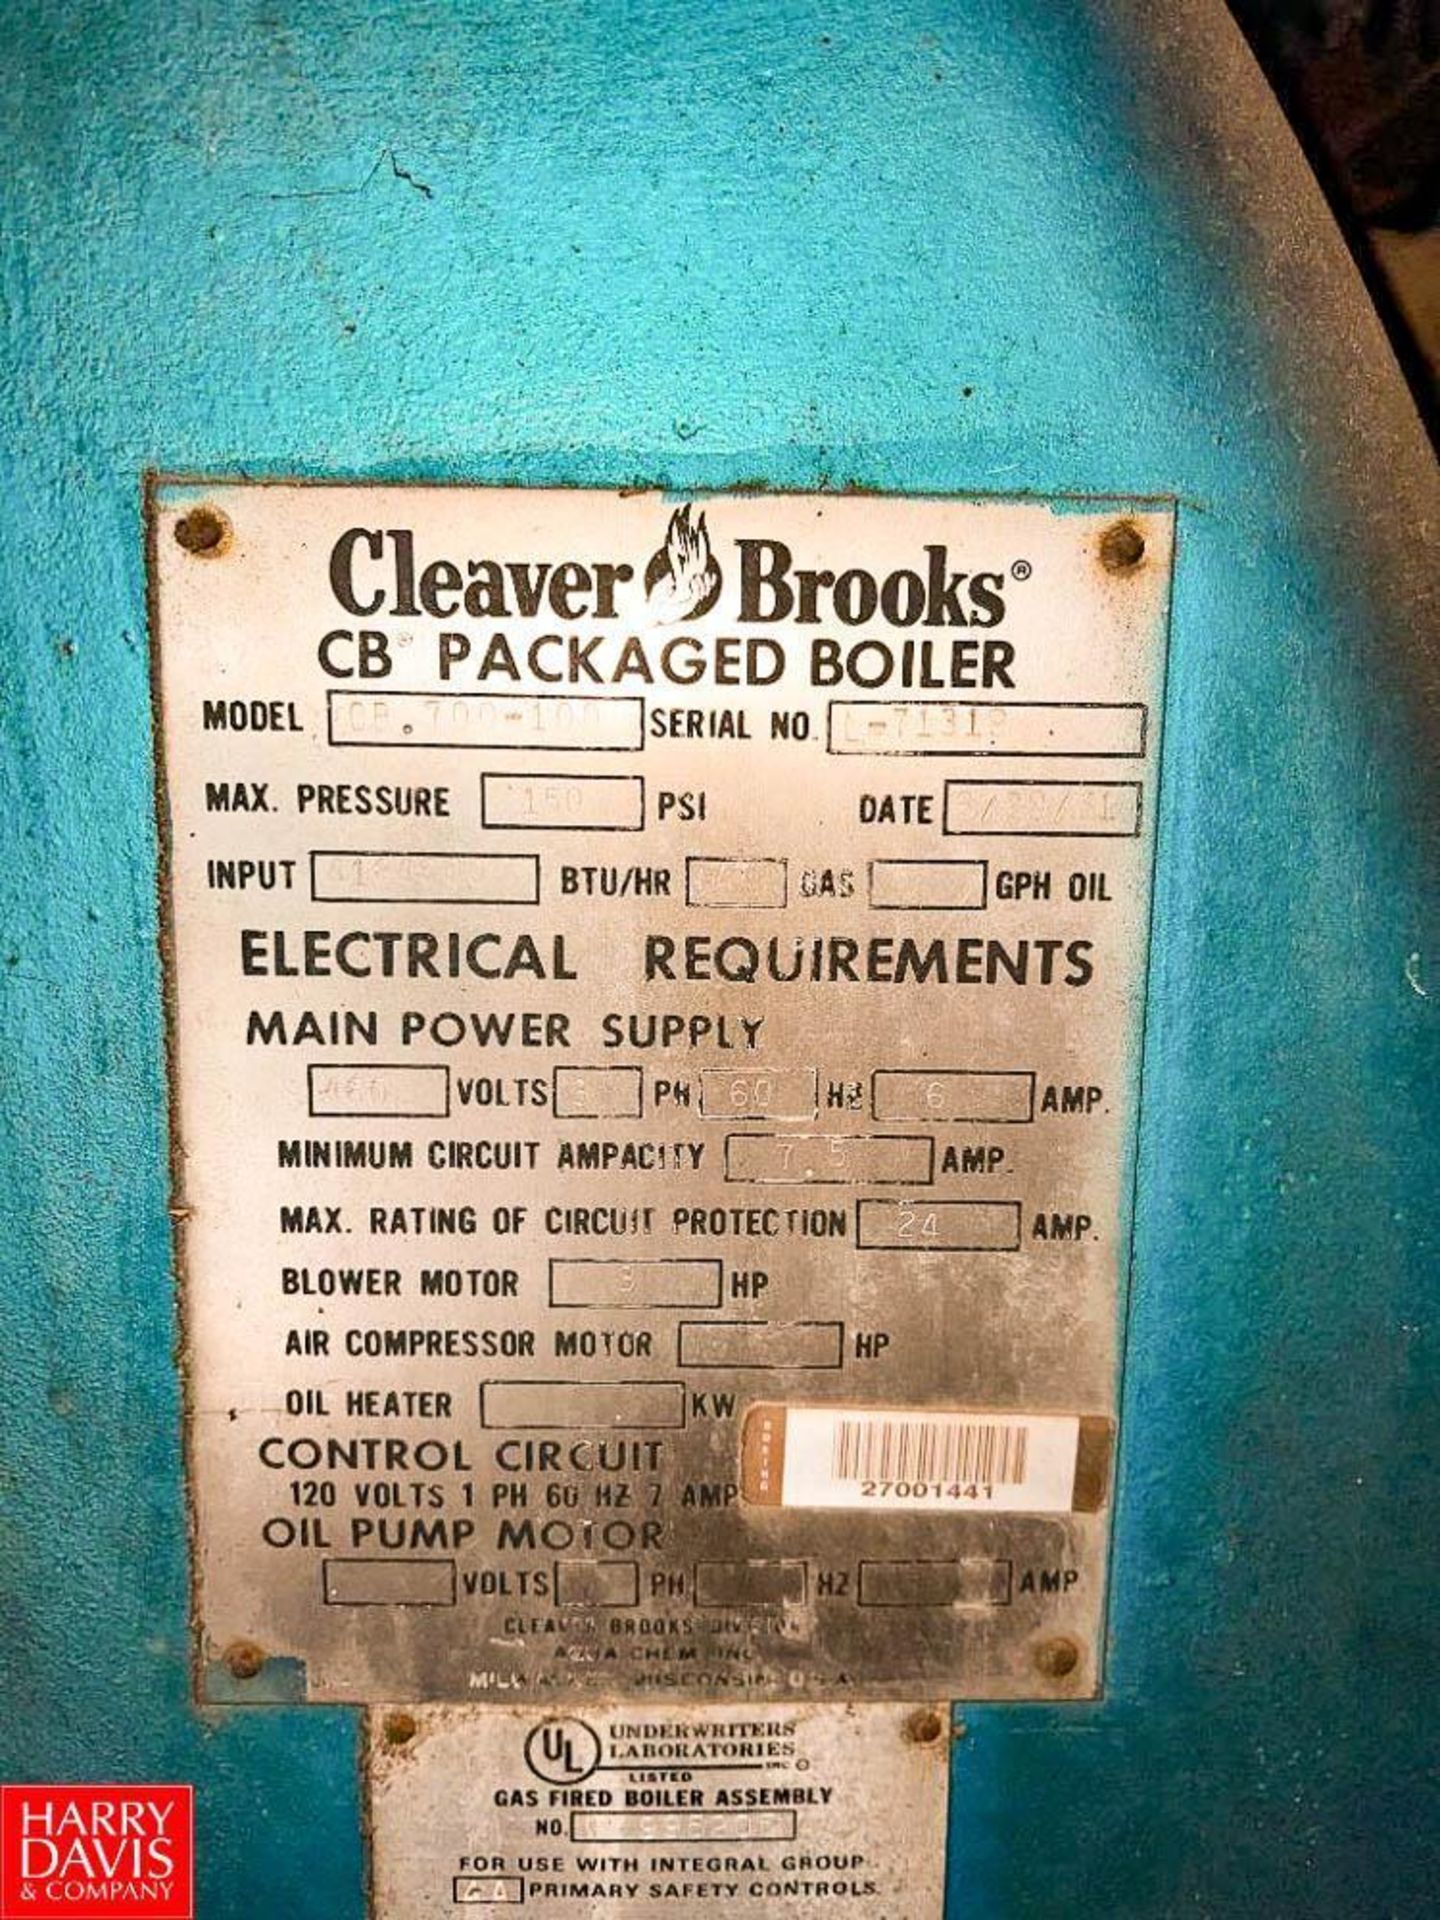 Cleaver Brooks 150 PSI Package Boiler, Model: CB.700-100, S/N: L-71319 - Rigging Fee: $3500 - Image 2 of 2